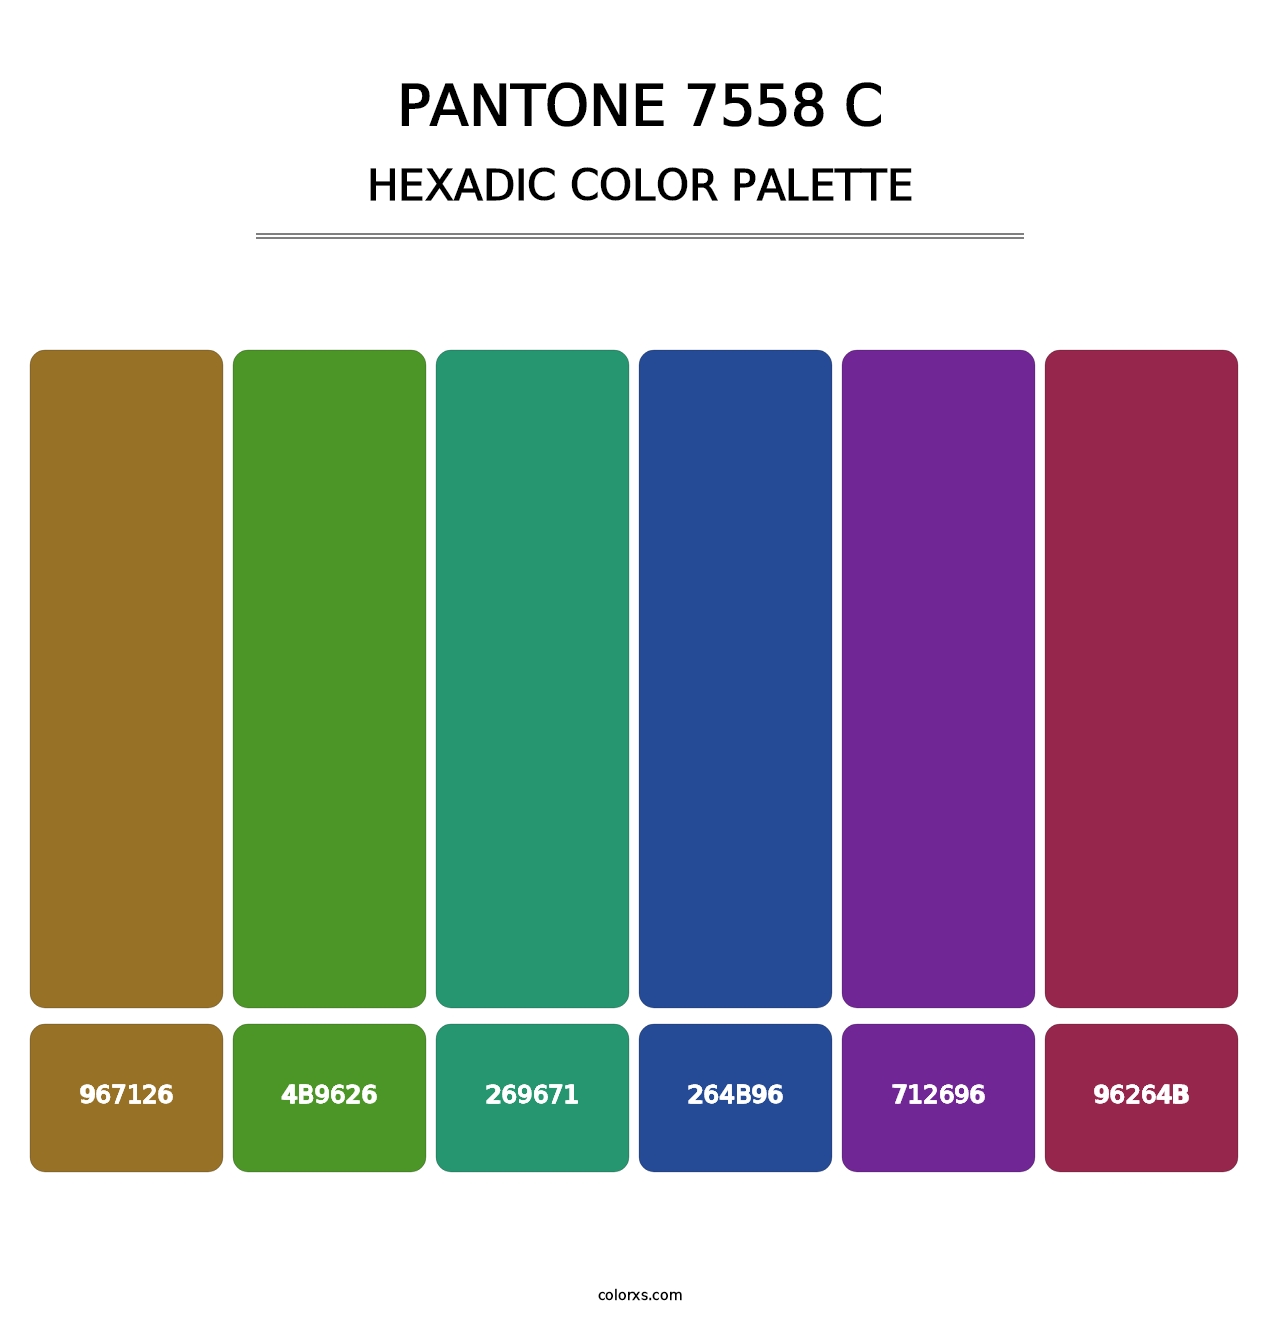 PANTONE 7558 C - Hexadic Color Palette